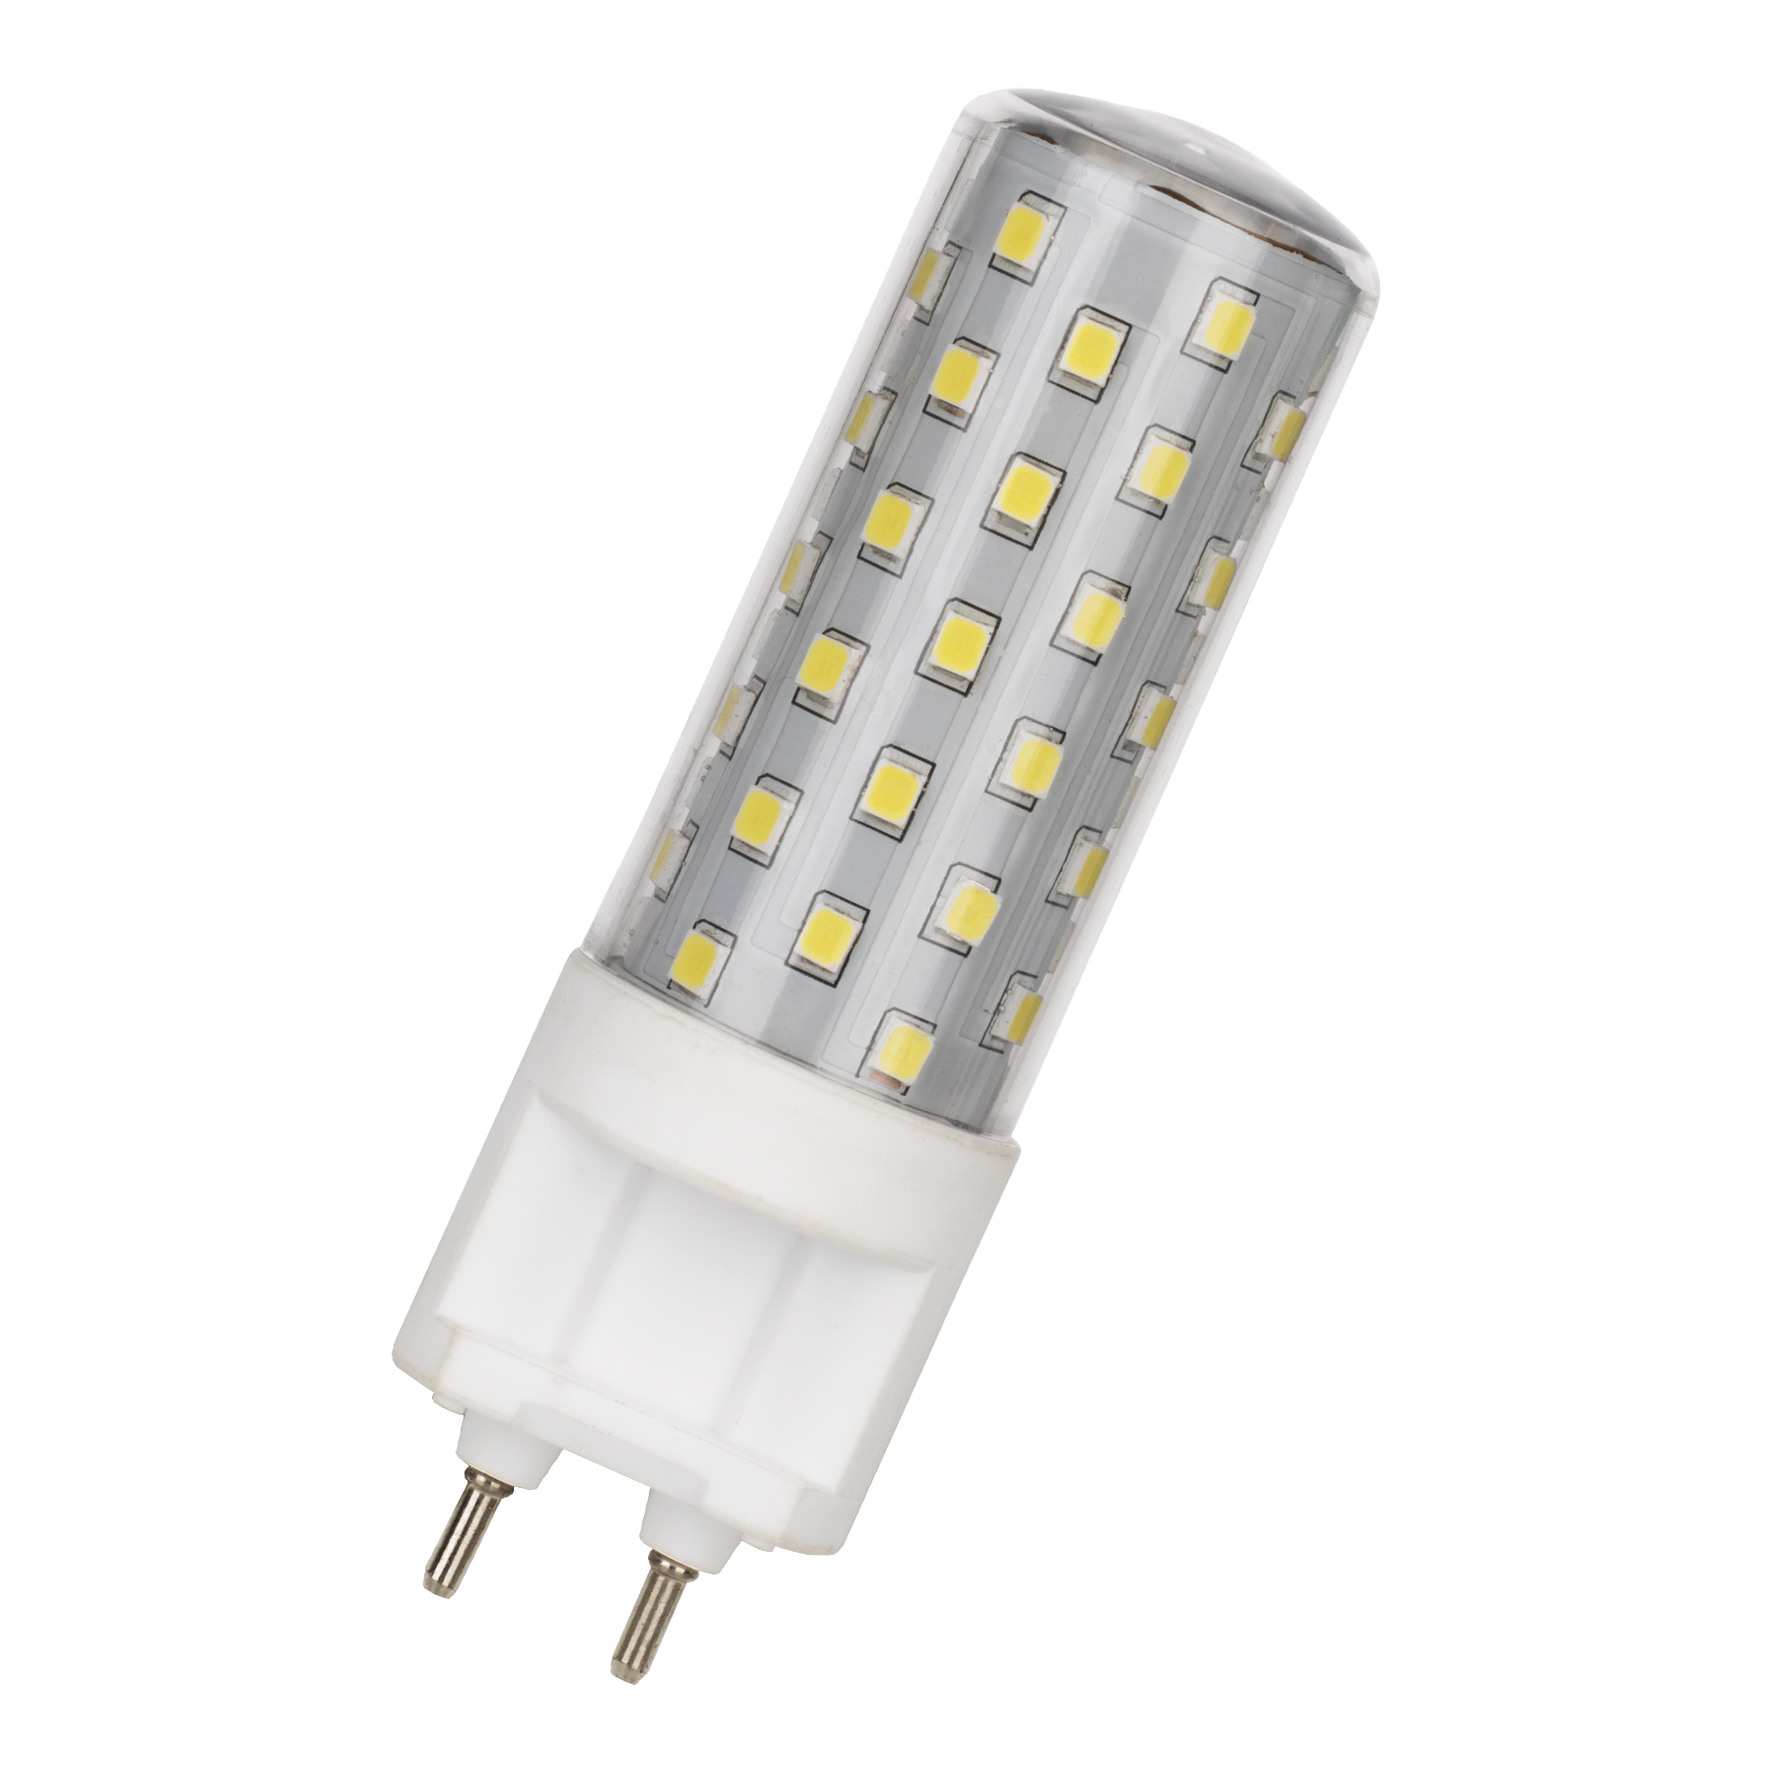 meubilair trek de wol over de ogen oplichter 143858 - AC - G12 - LED HID Compact - LED Lampen - Producten | Bailey